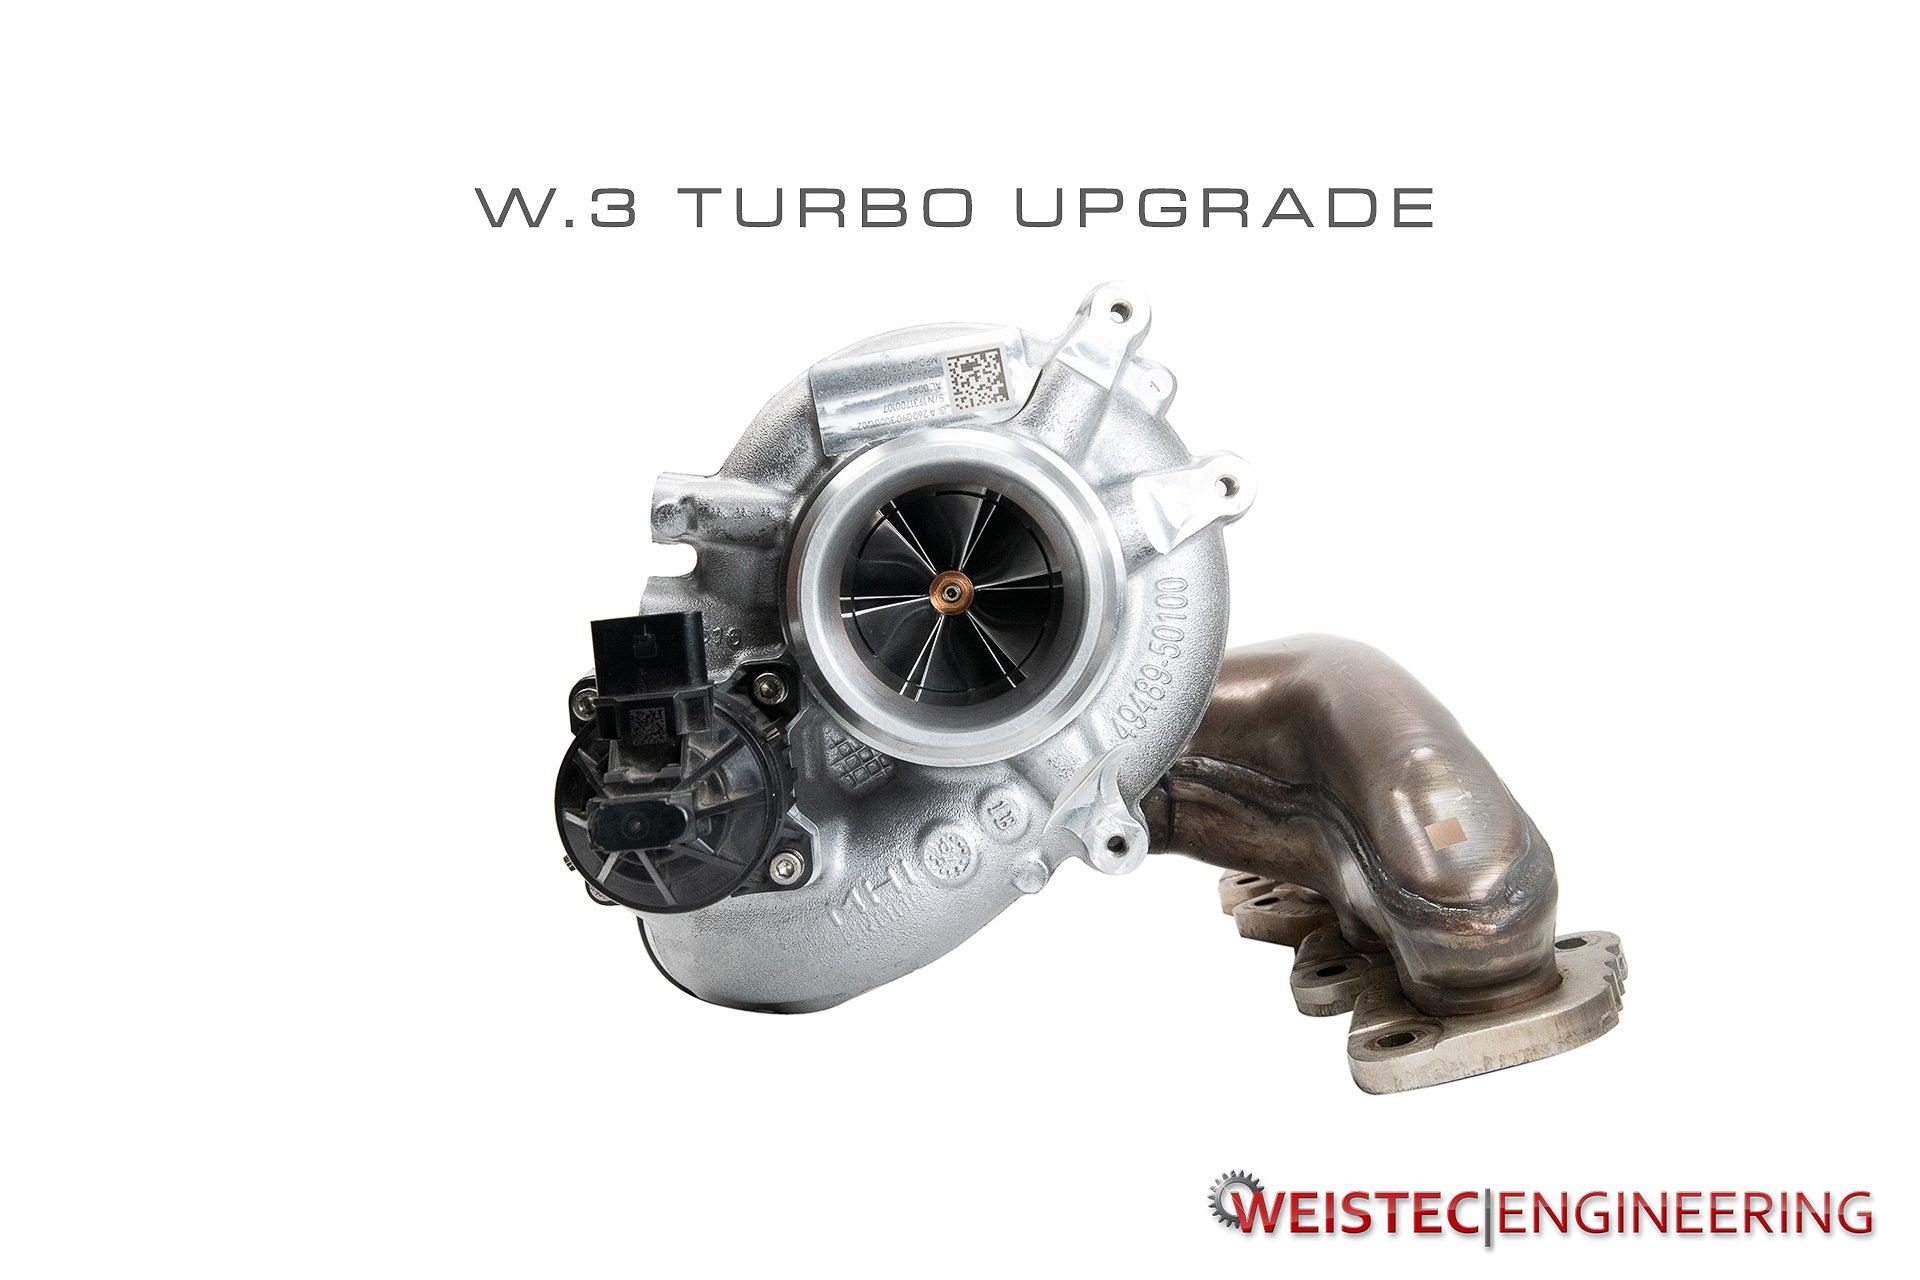 W.3 Turbo Upgrade, M260